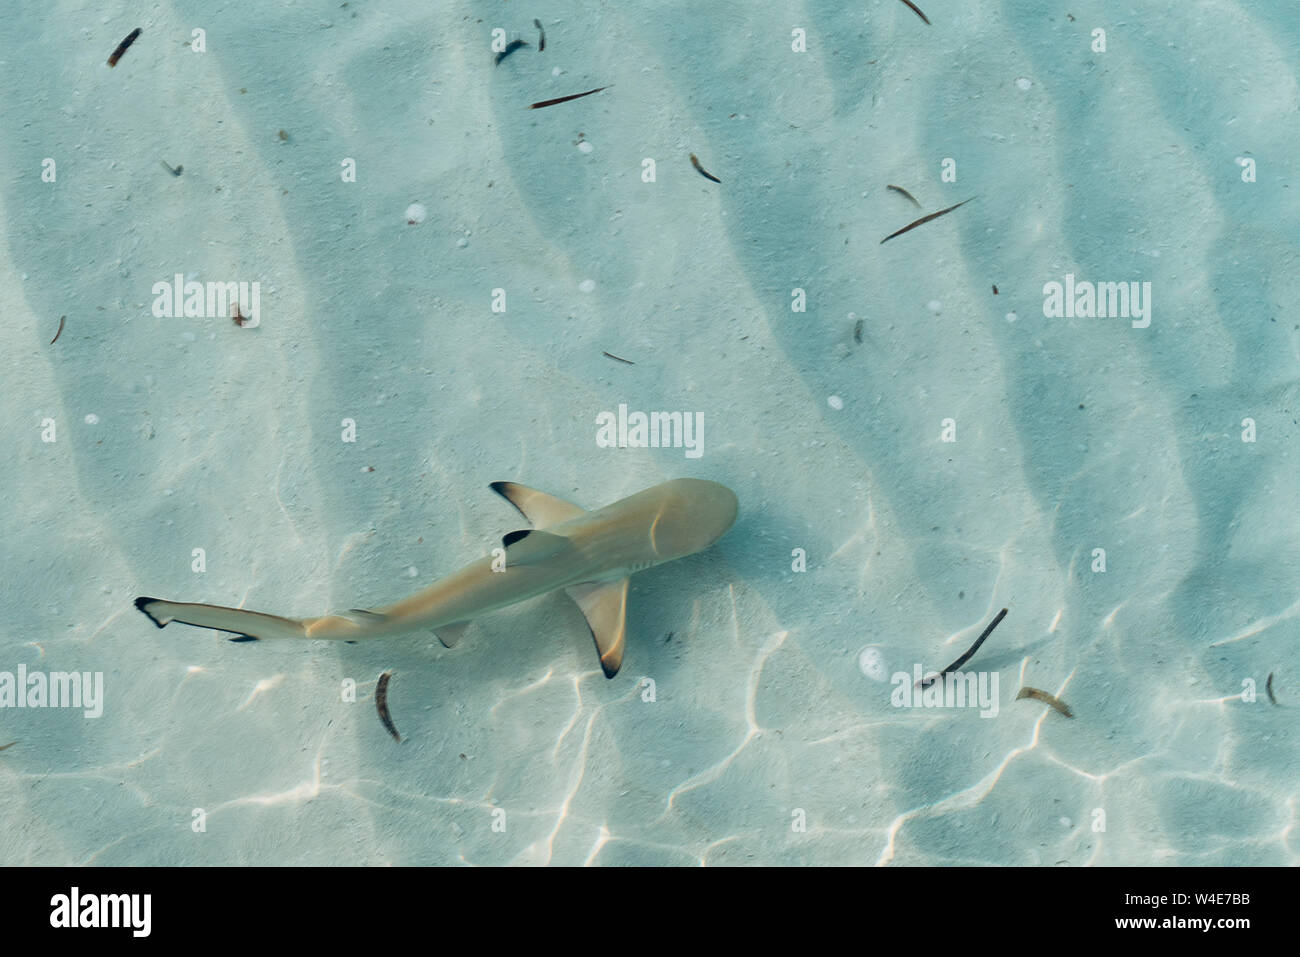 Baby Sharks Banque D Image Et Photos Alamy